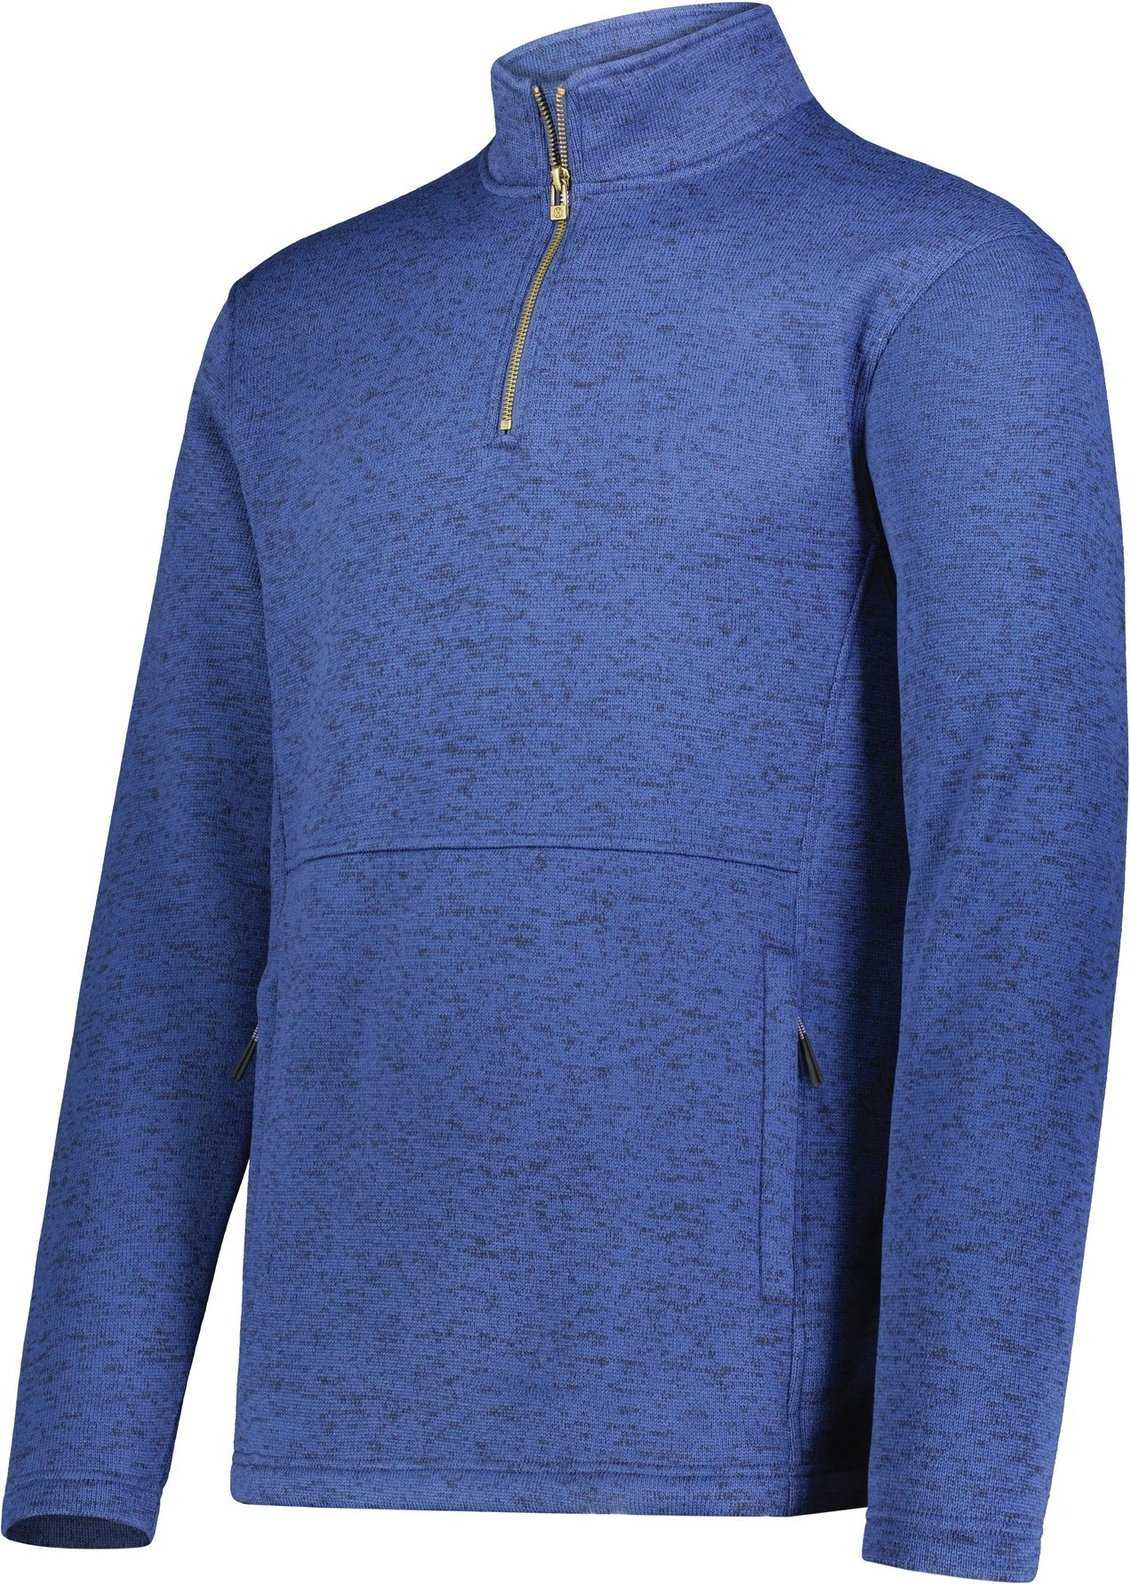 Holloway 223540 Alpine Sweater Fleece 1/4 Zip Pullover - Navy Heather - HIT a Double